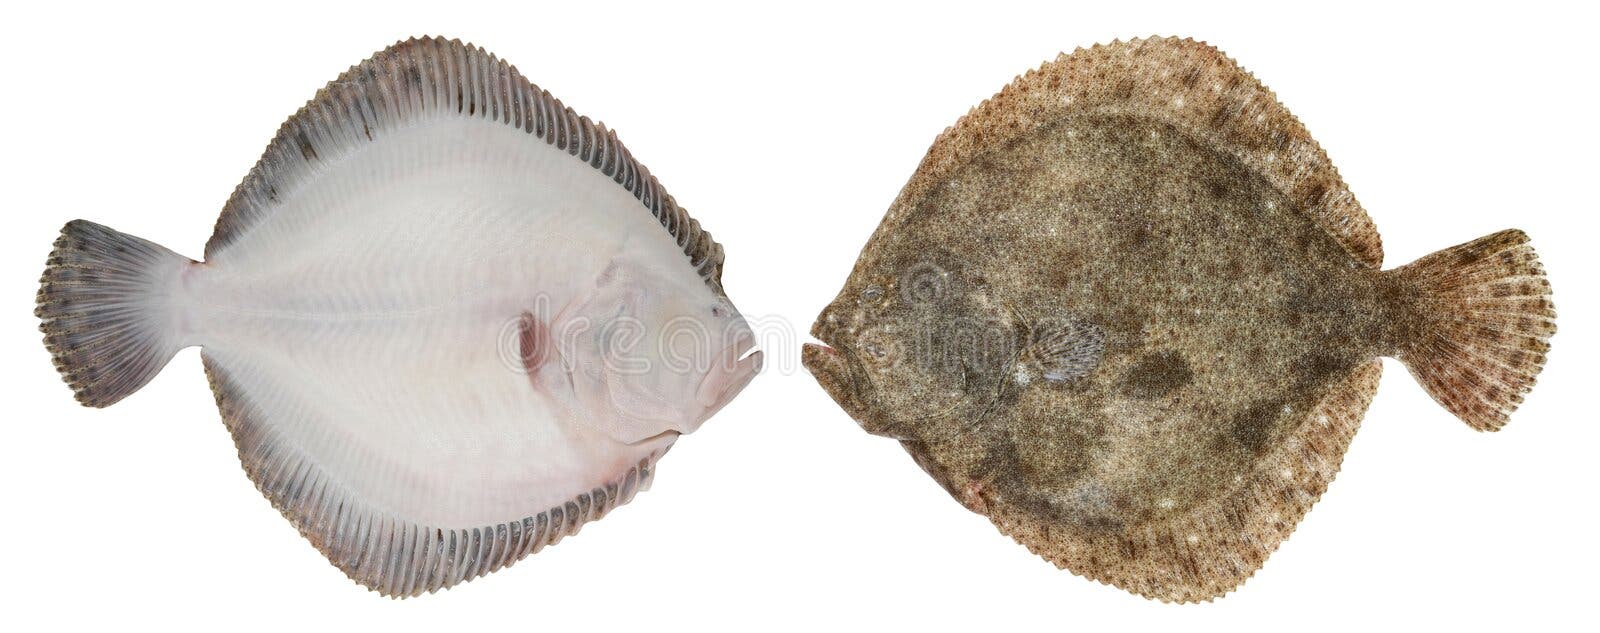 Gilt-head bream and Turbo fish